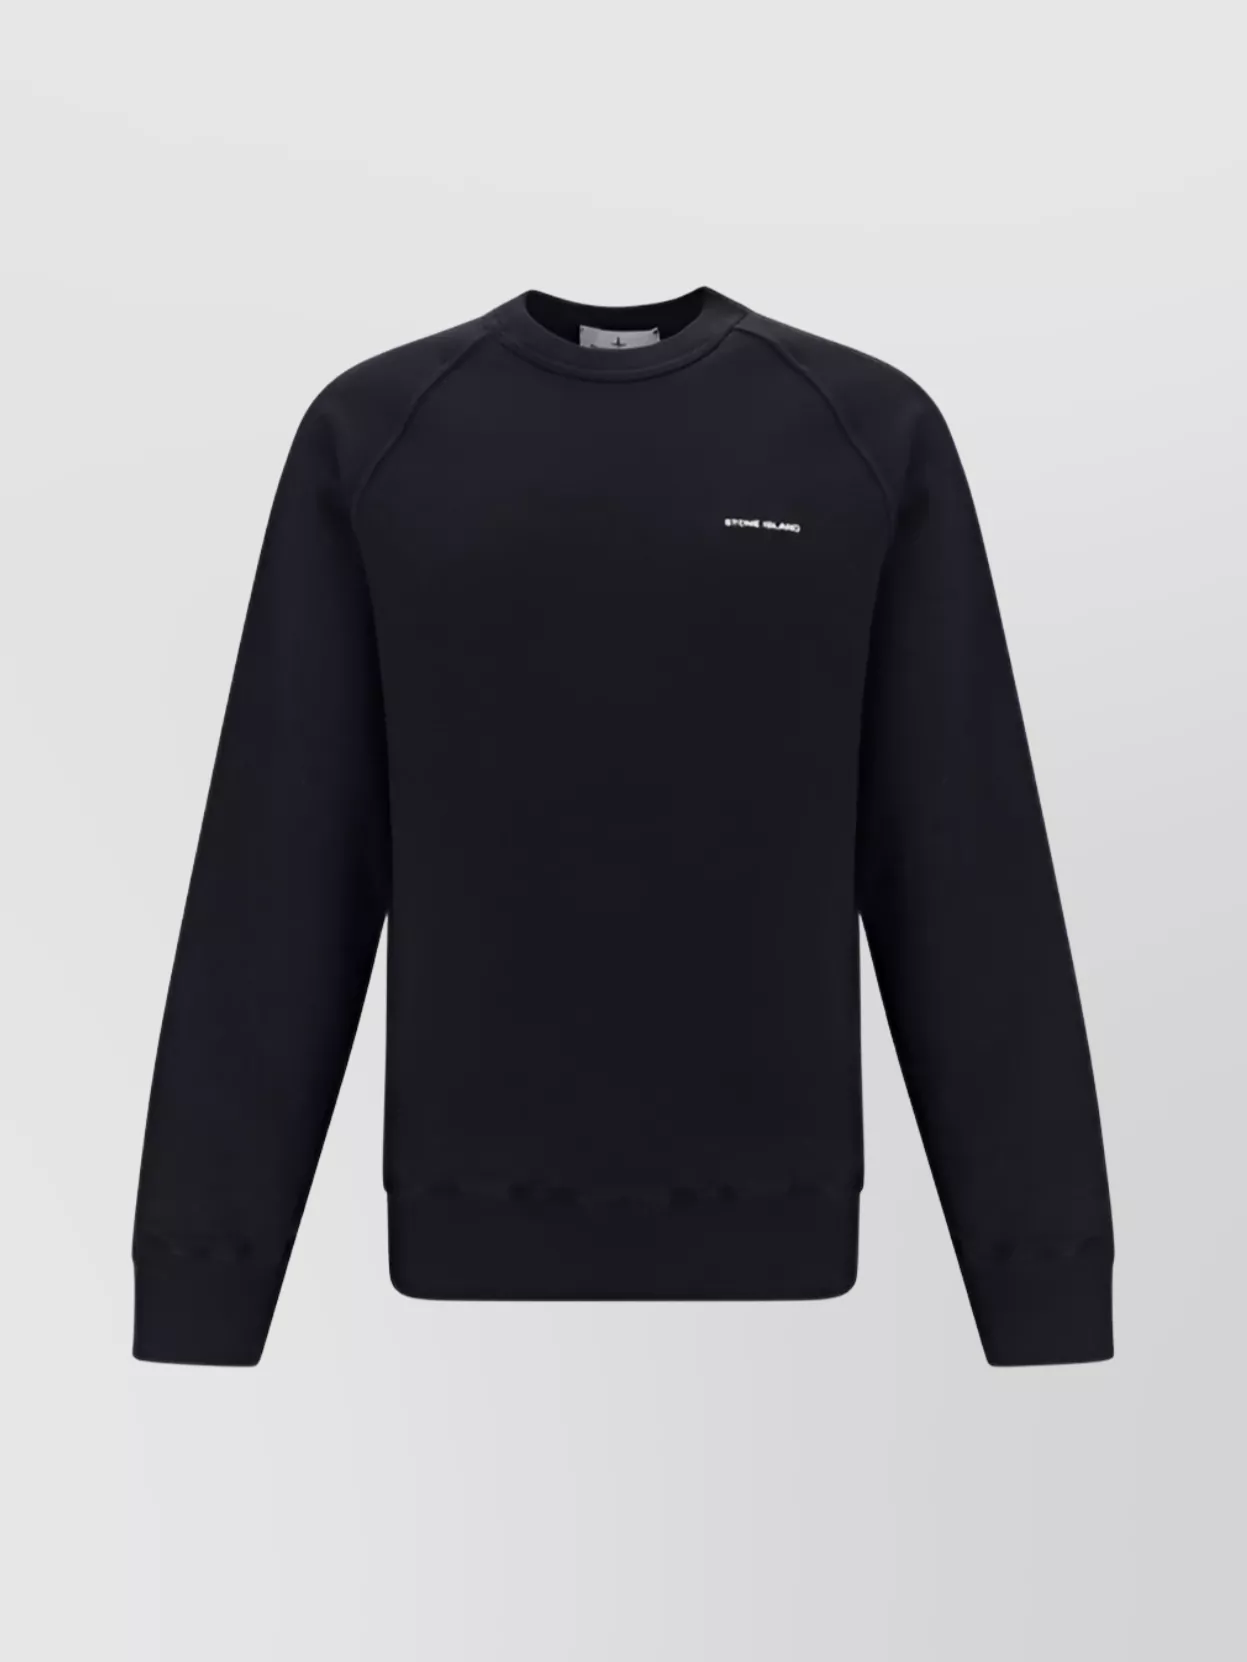 Stone Island Cotton Crew Neck Sweatshirt In Black